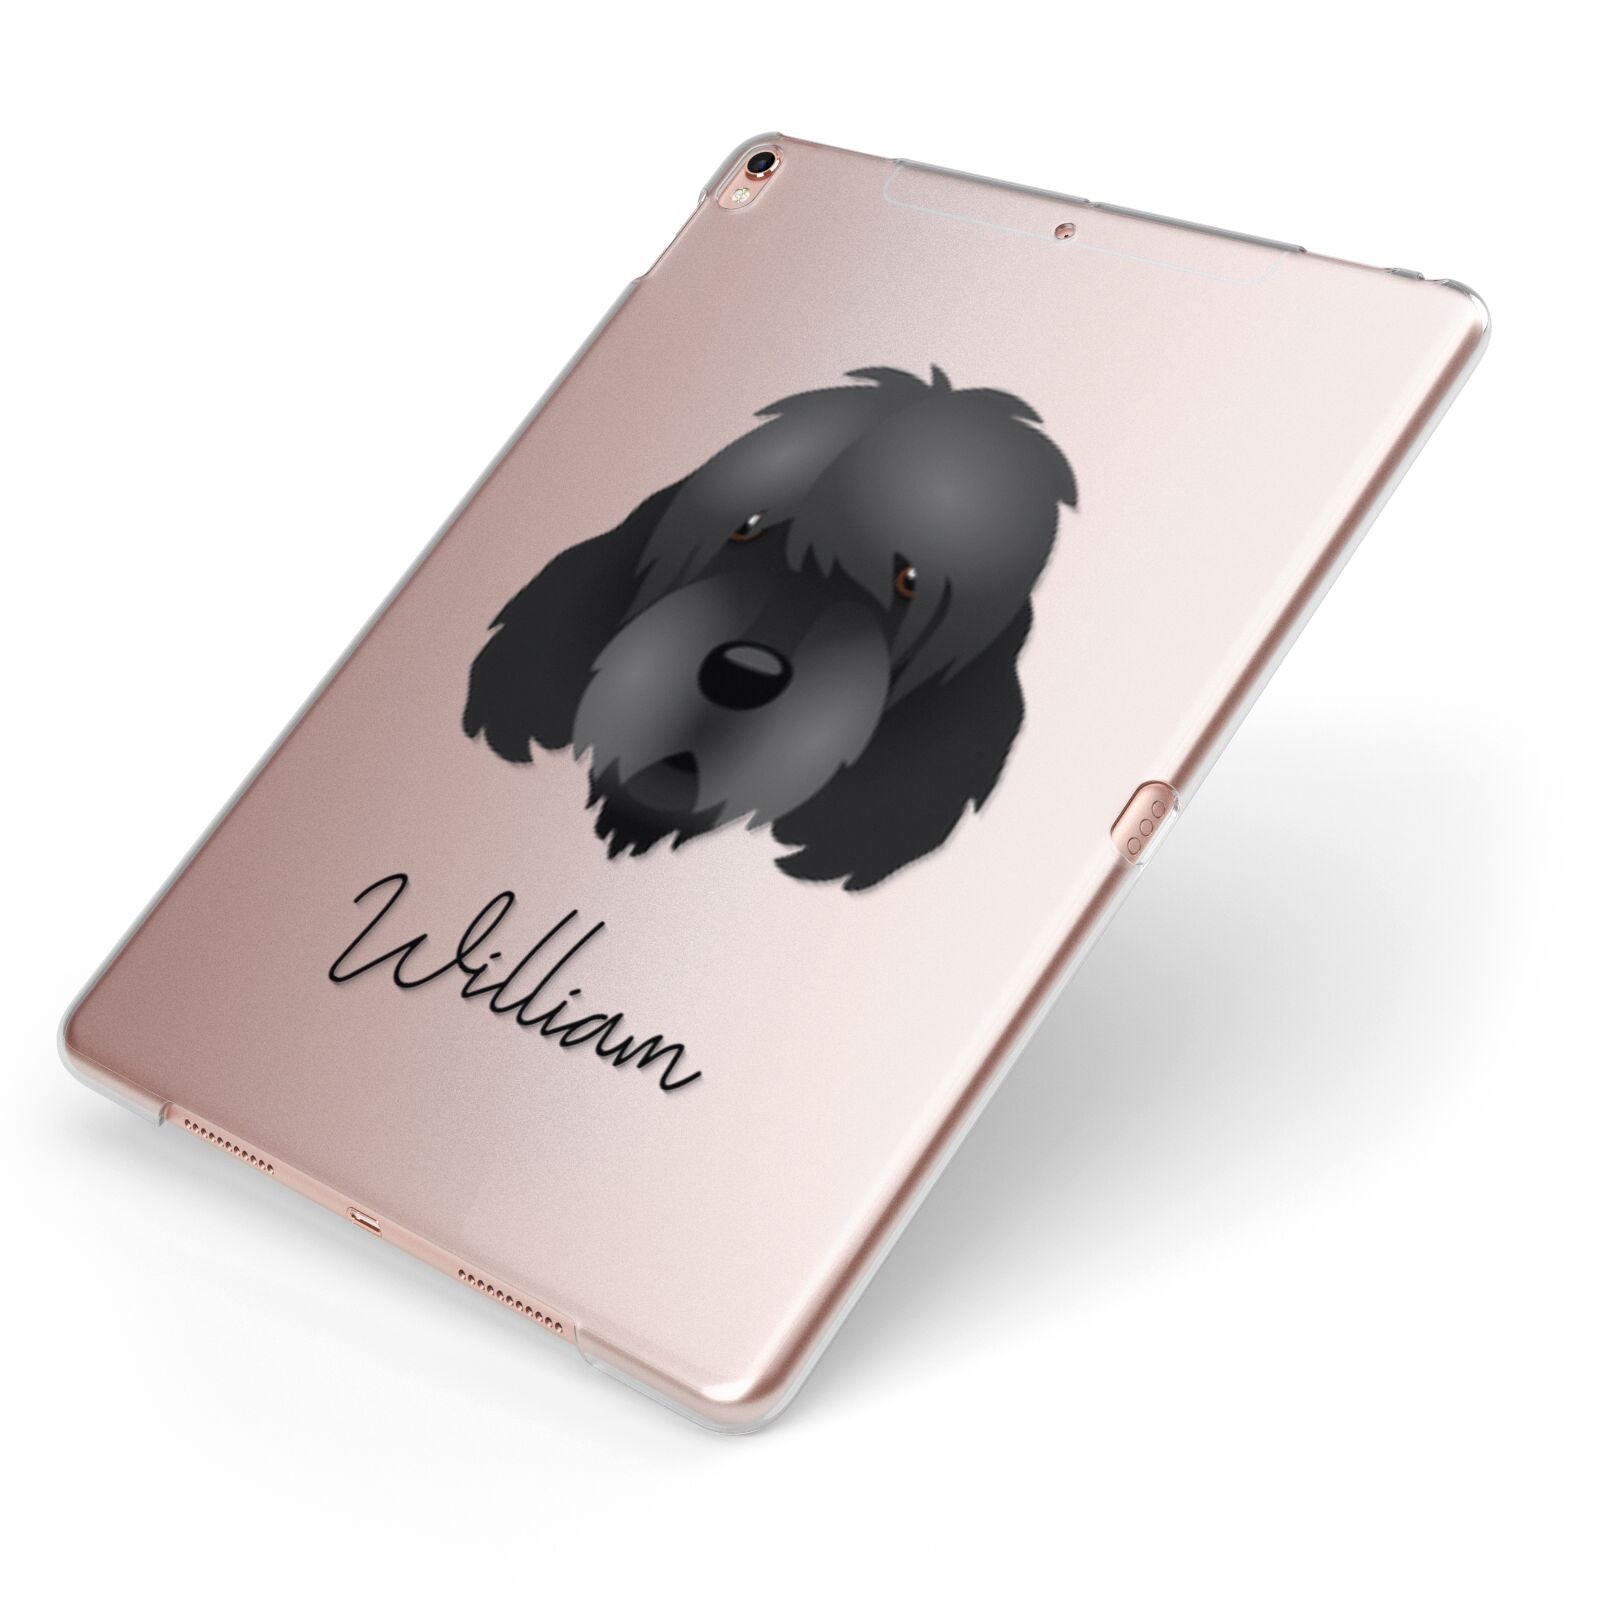 Otterhound Personalised Apple iPad Case on Rose Gold iPad Side View